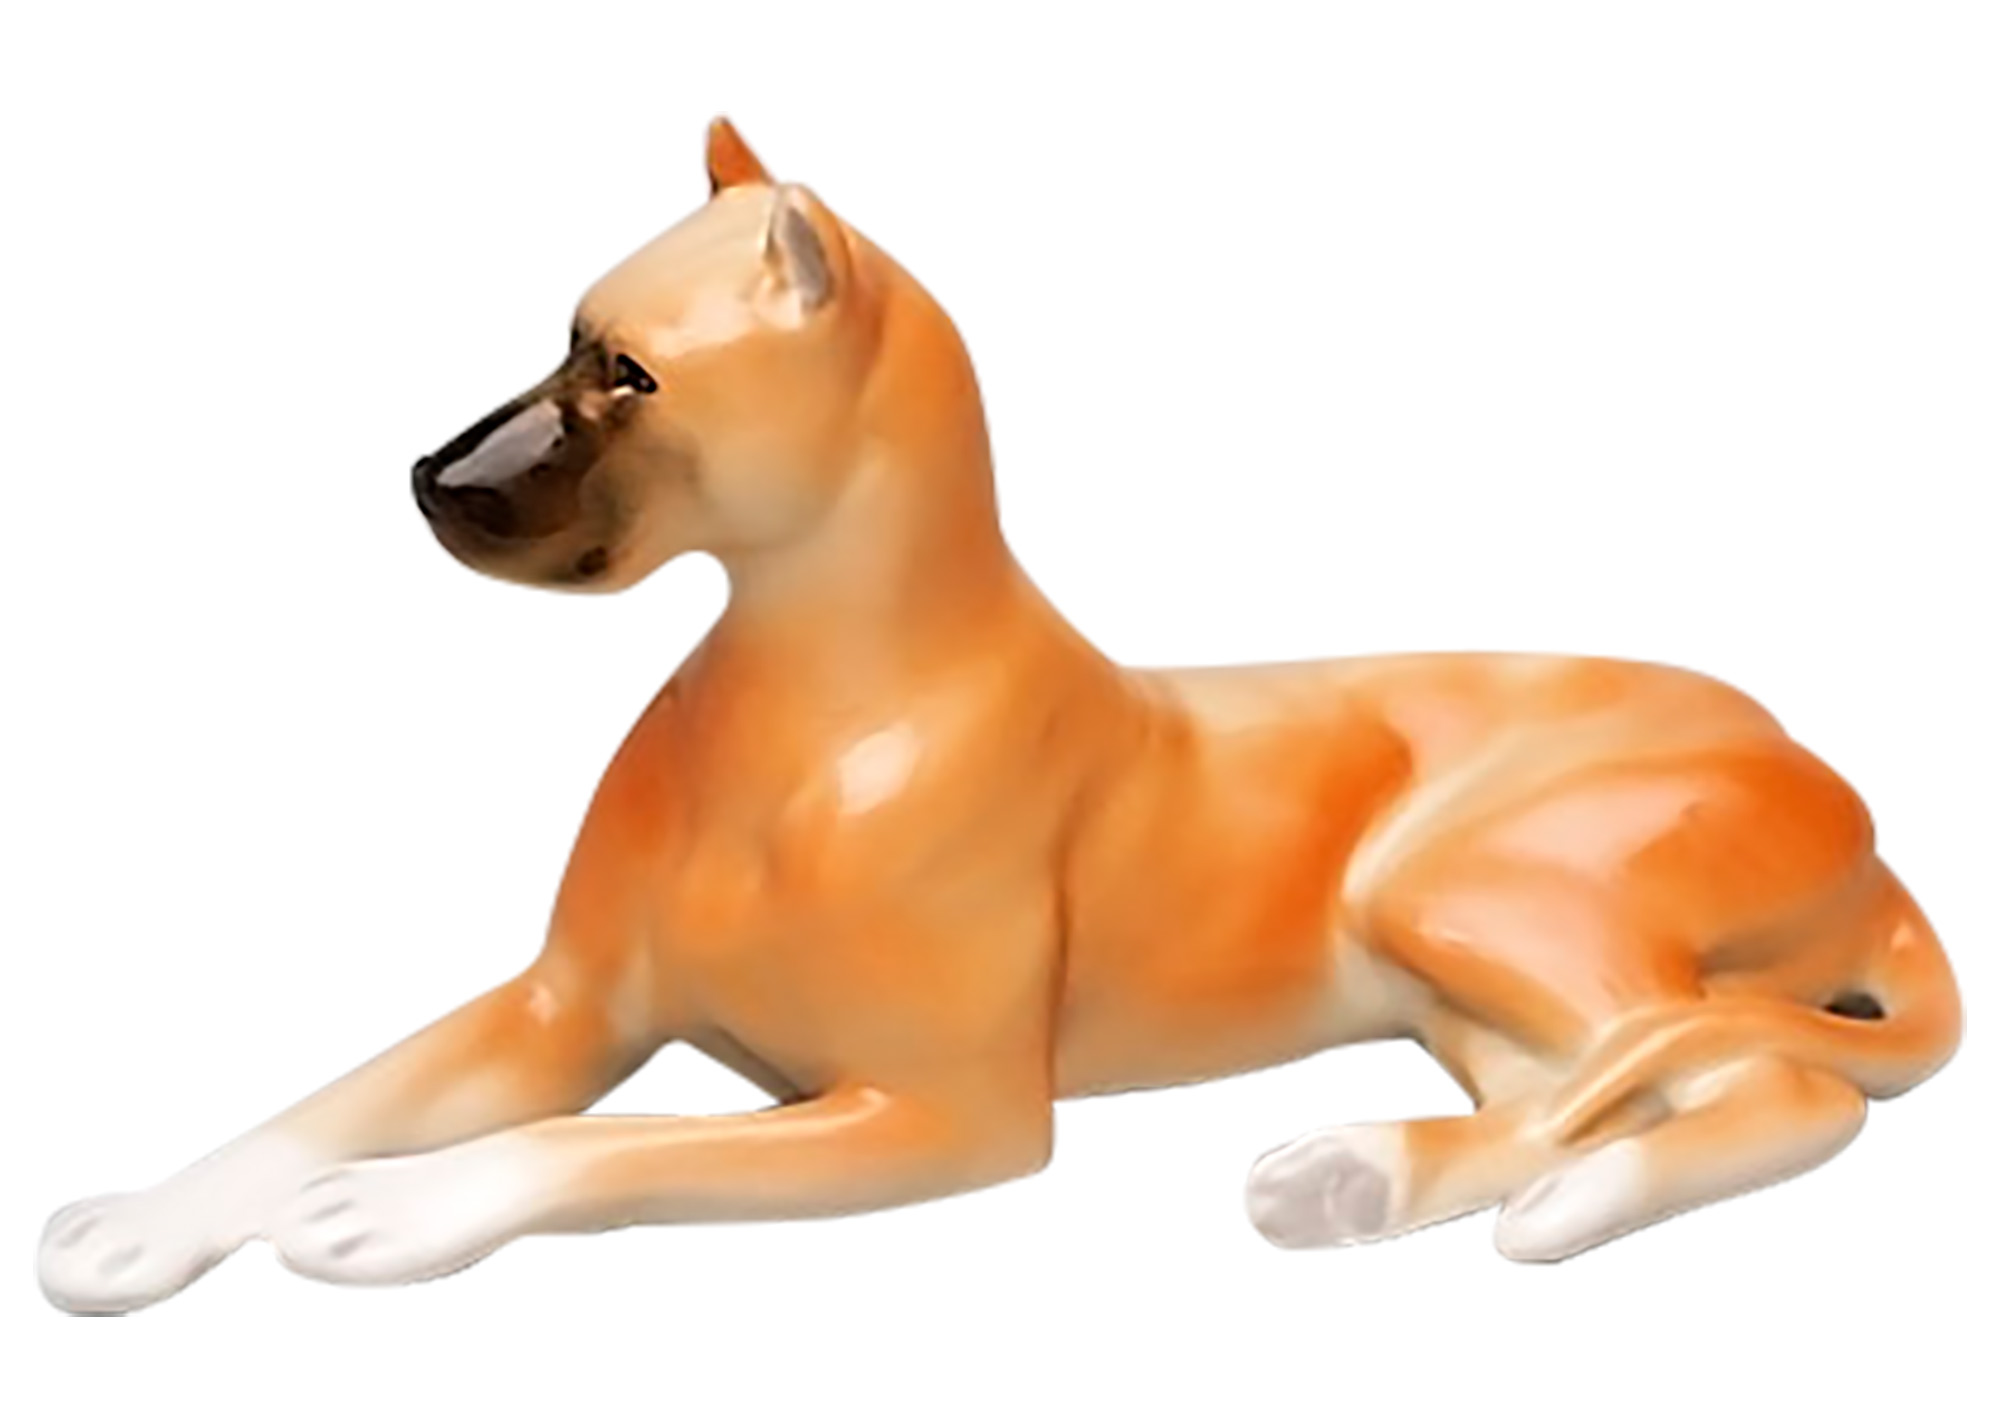 Buy Fawn Great Dane Dog Figurine at GoldenCockerel.com